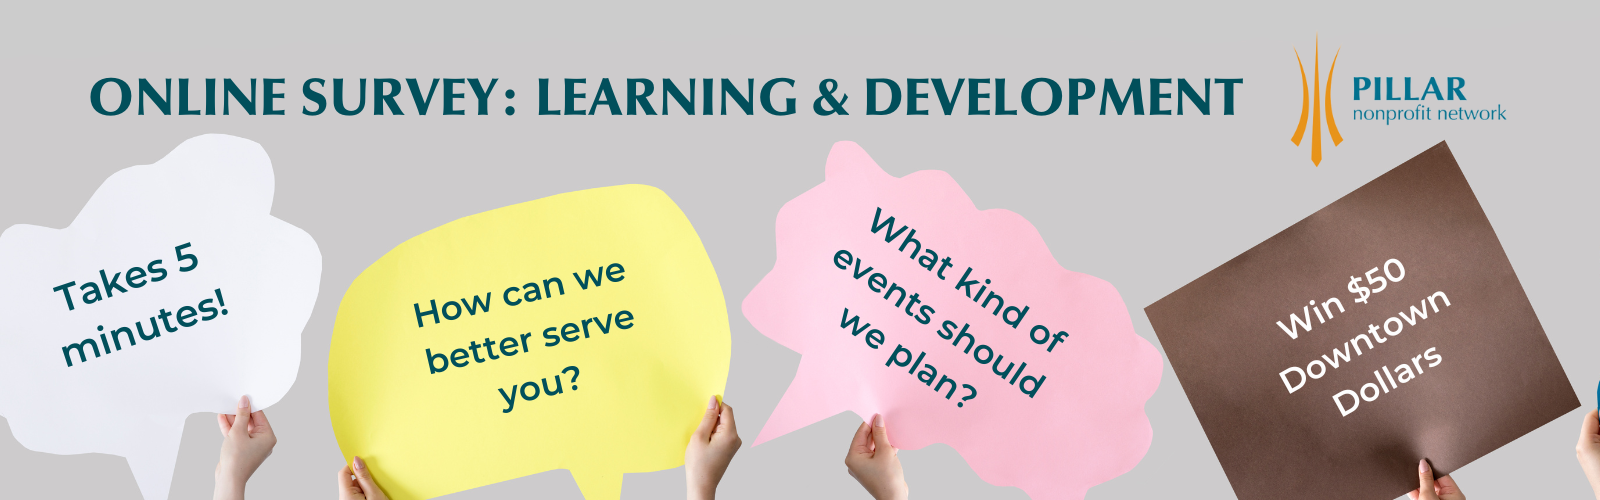 Online Survey - Learning & Development